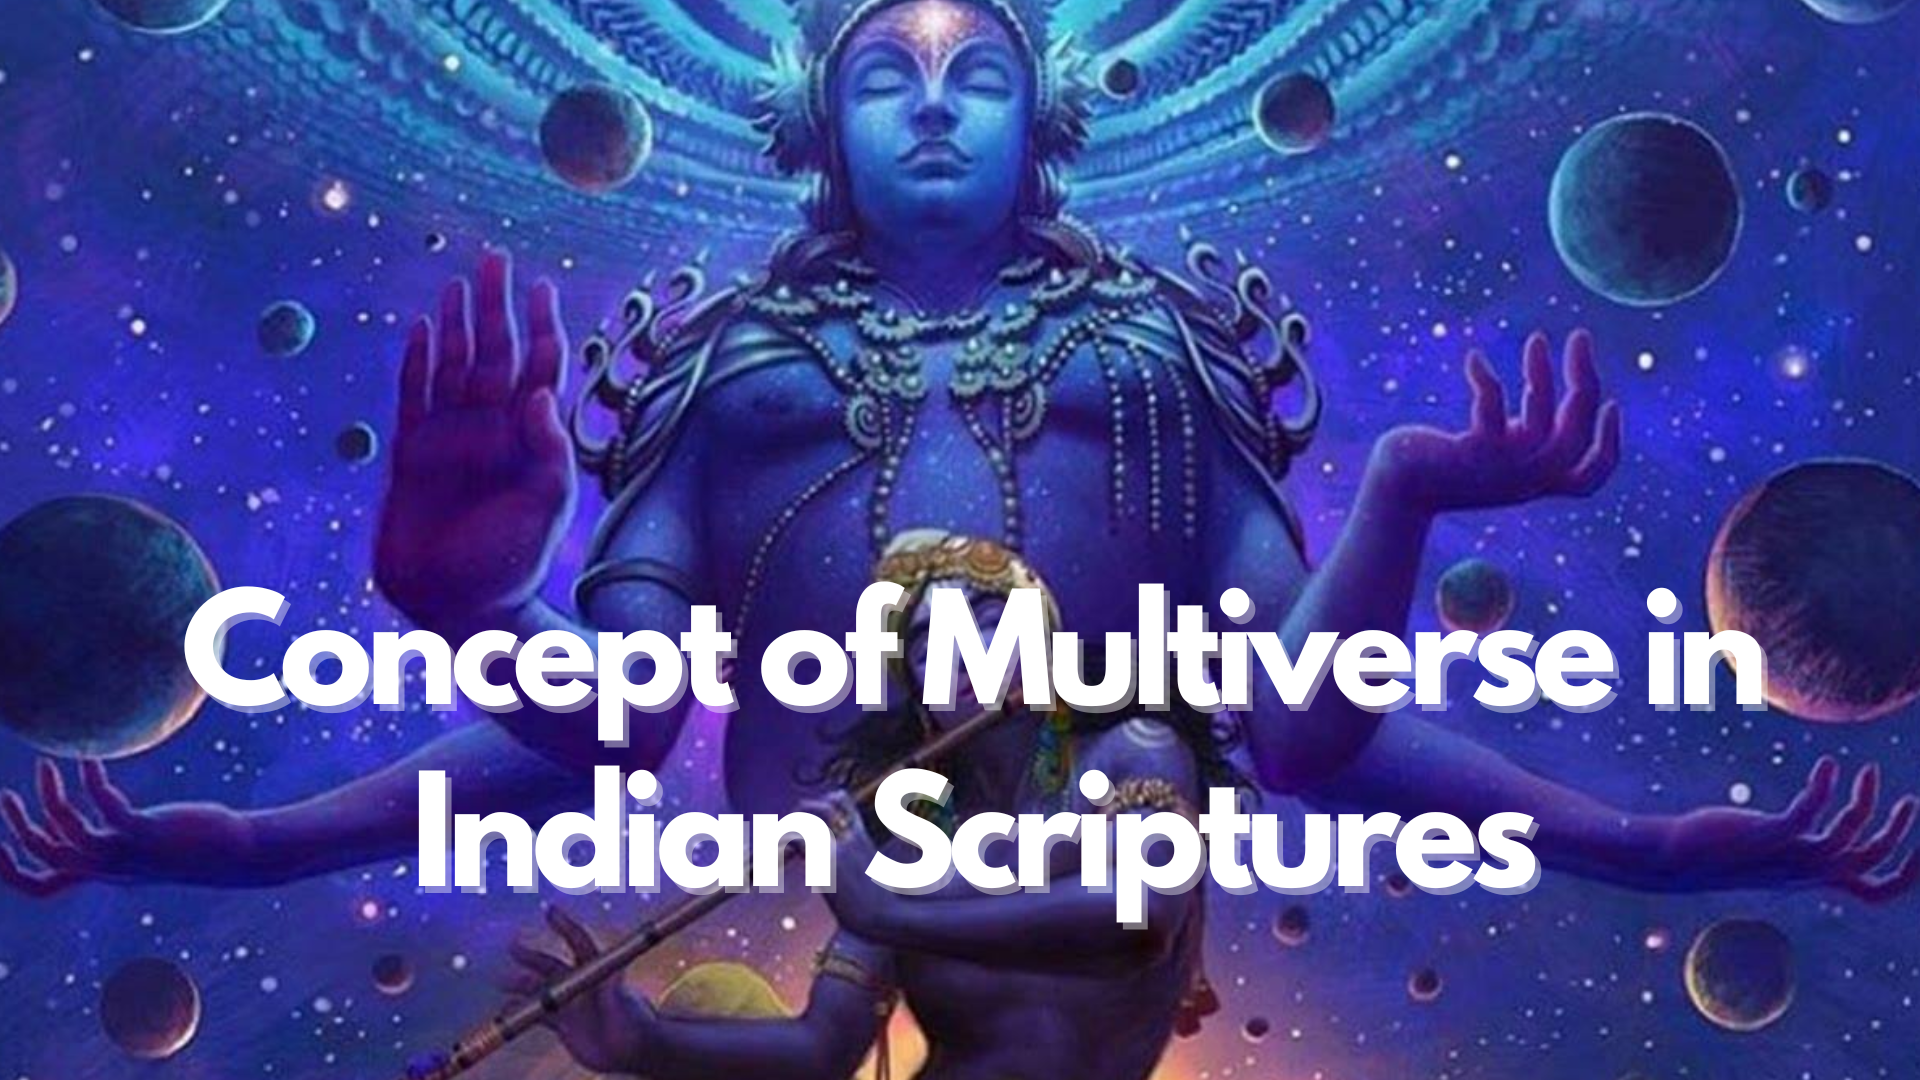 Multiverse in Indian Scriptures